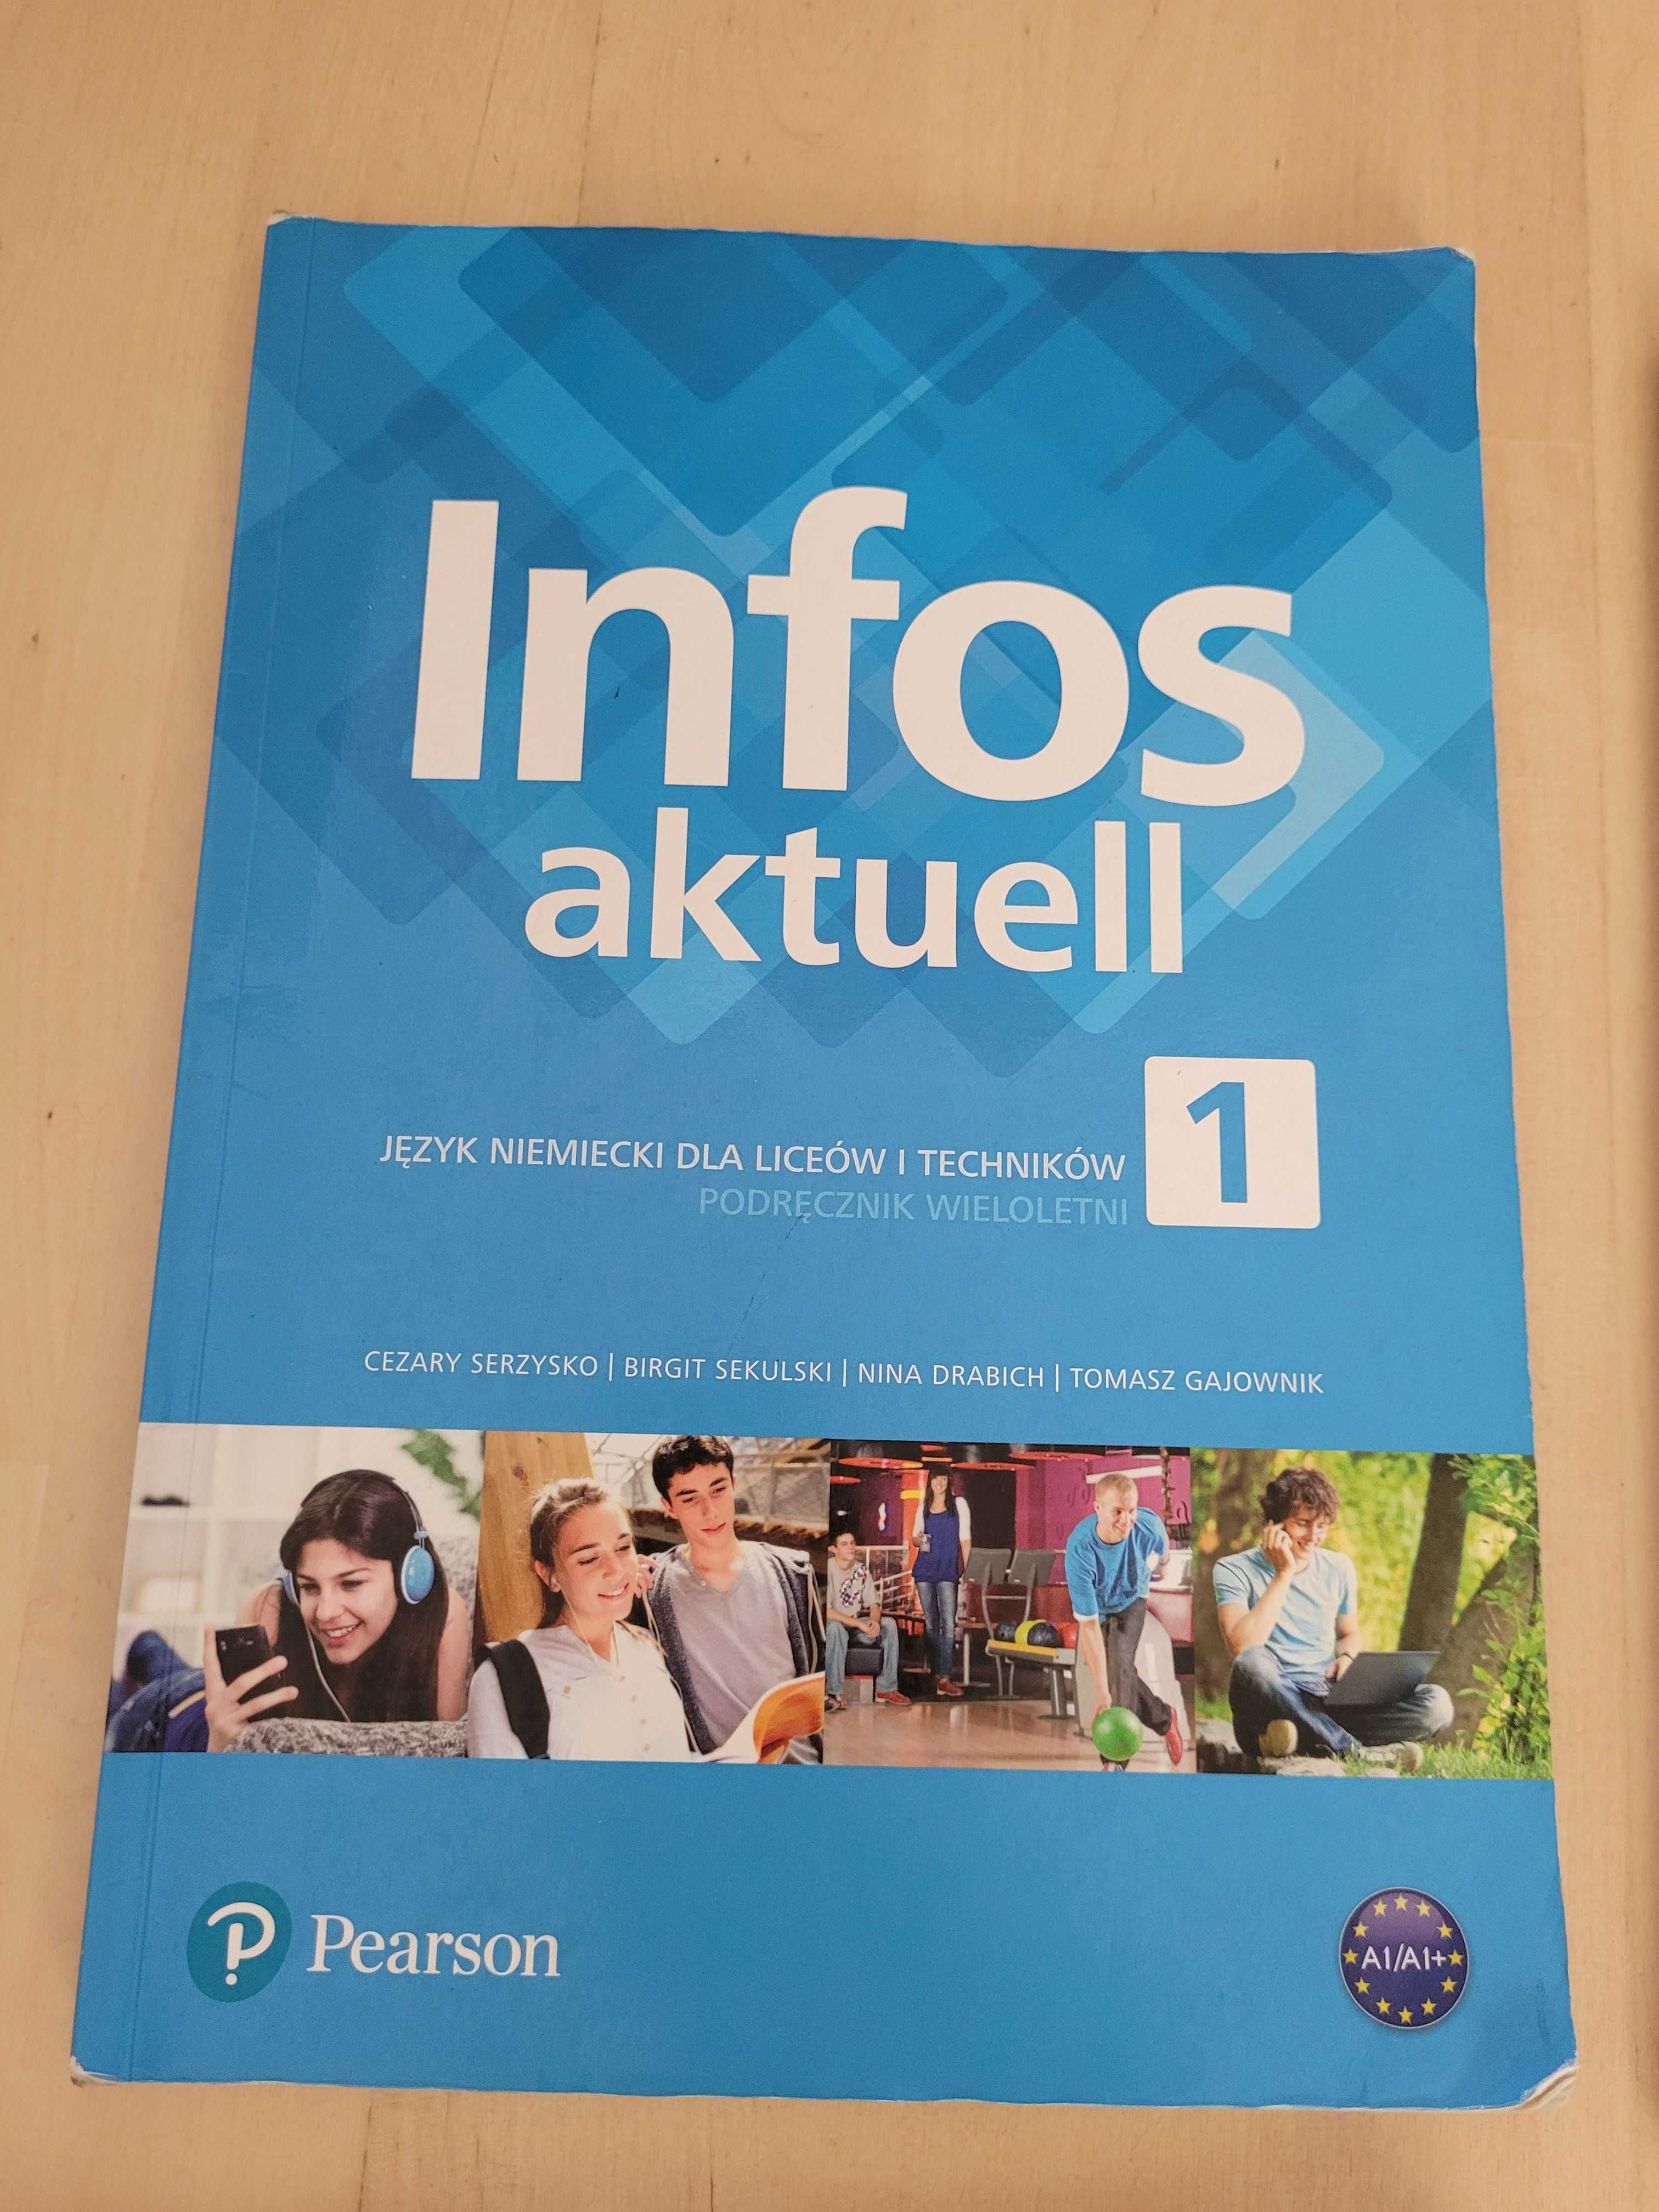 Infos aktuell 1 podręcznik